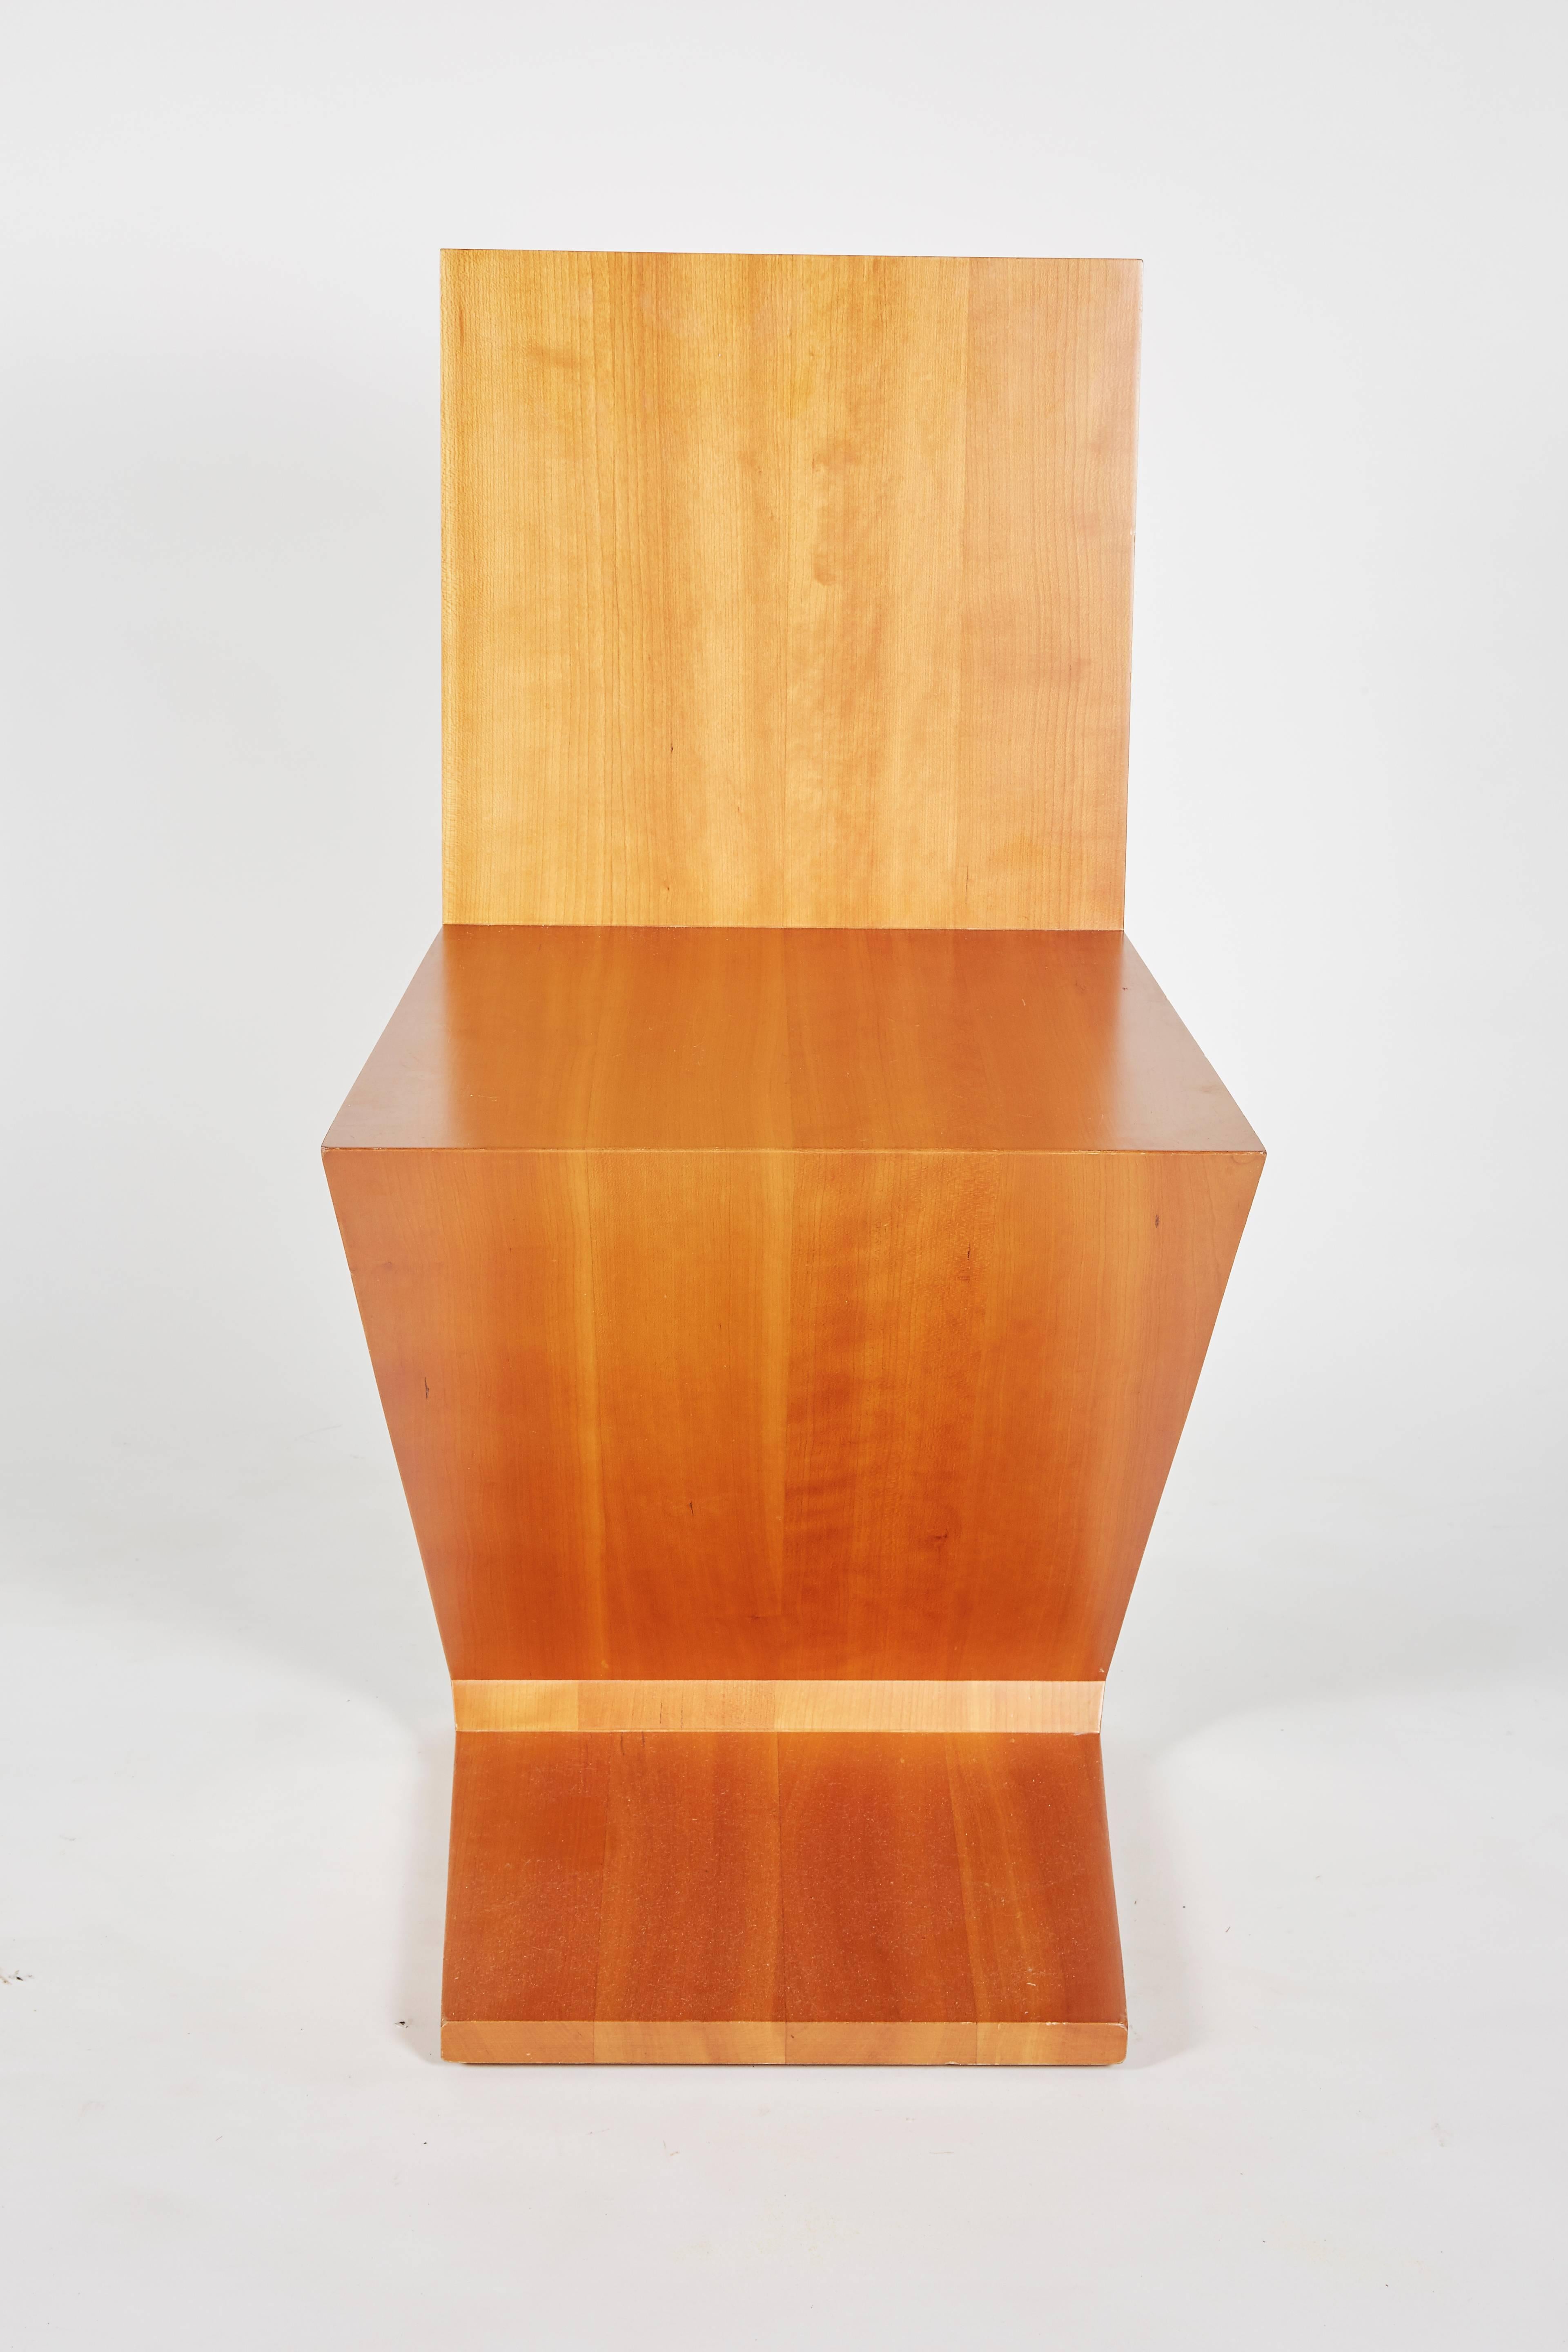 Italian Gerrit Rietveld Zig Zag Chair for Cassina